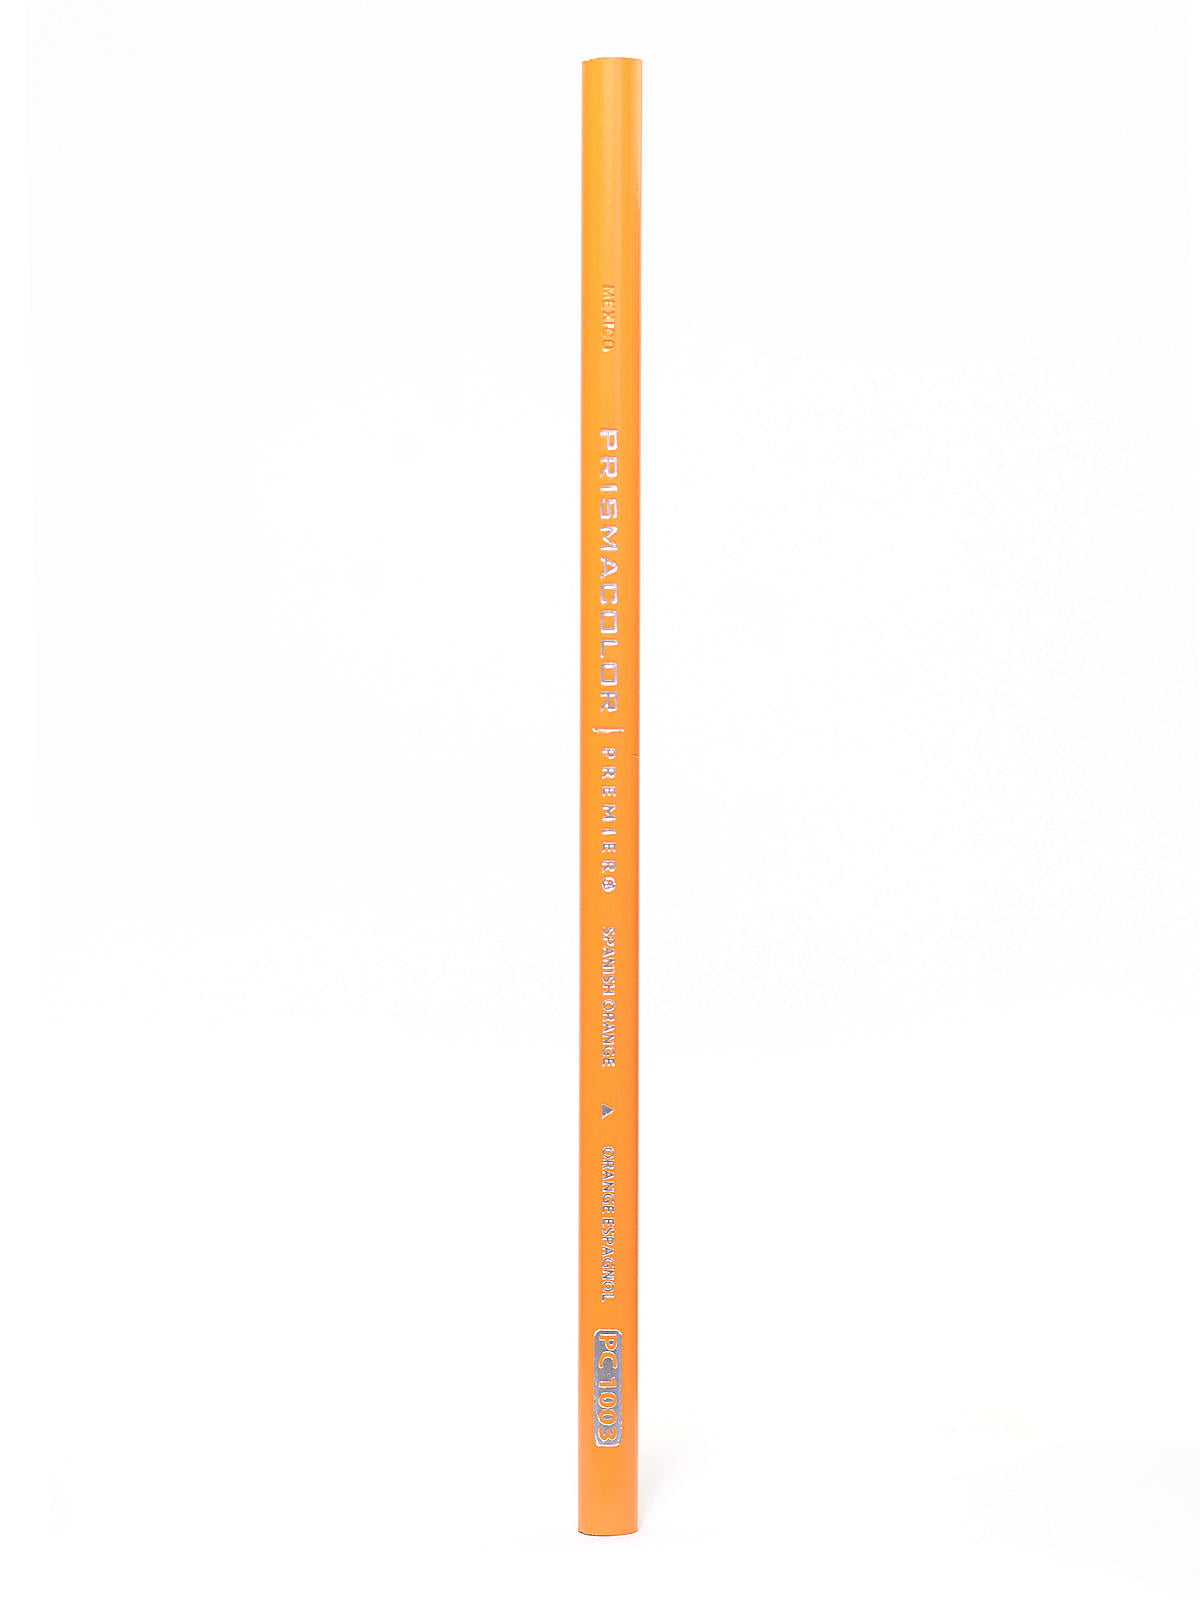 Prismacolor Premier Colored Pencil - Spanish Orange